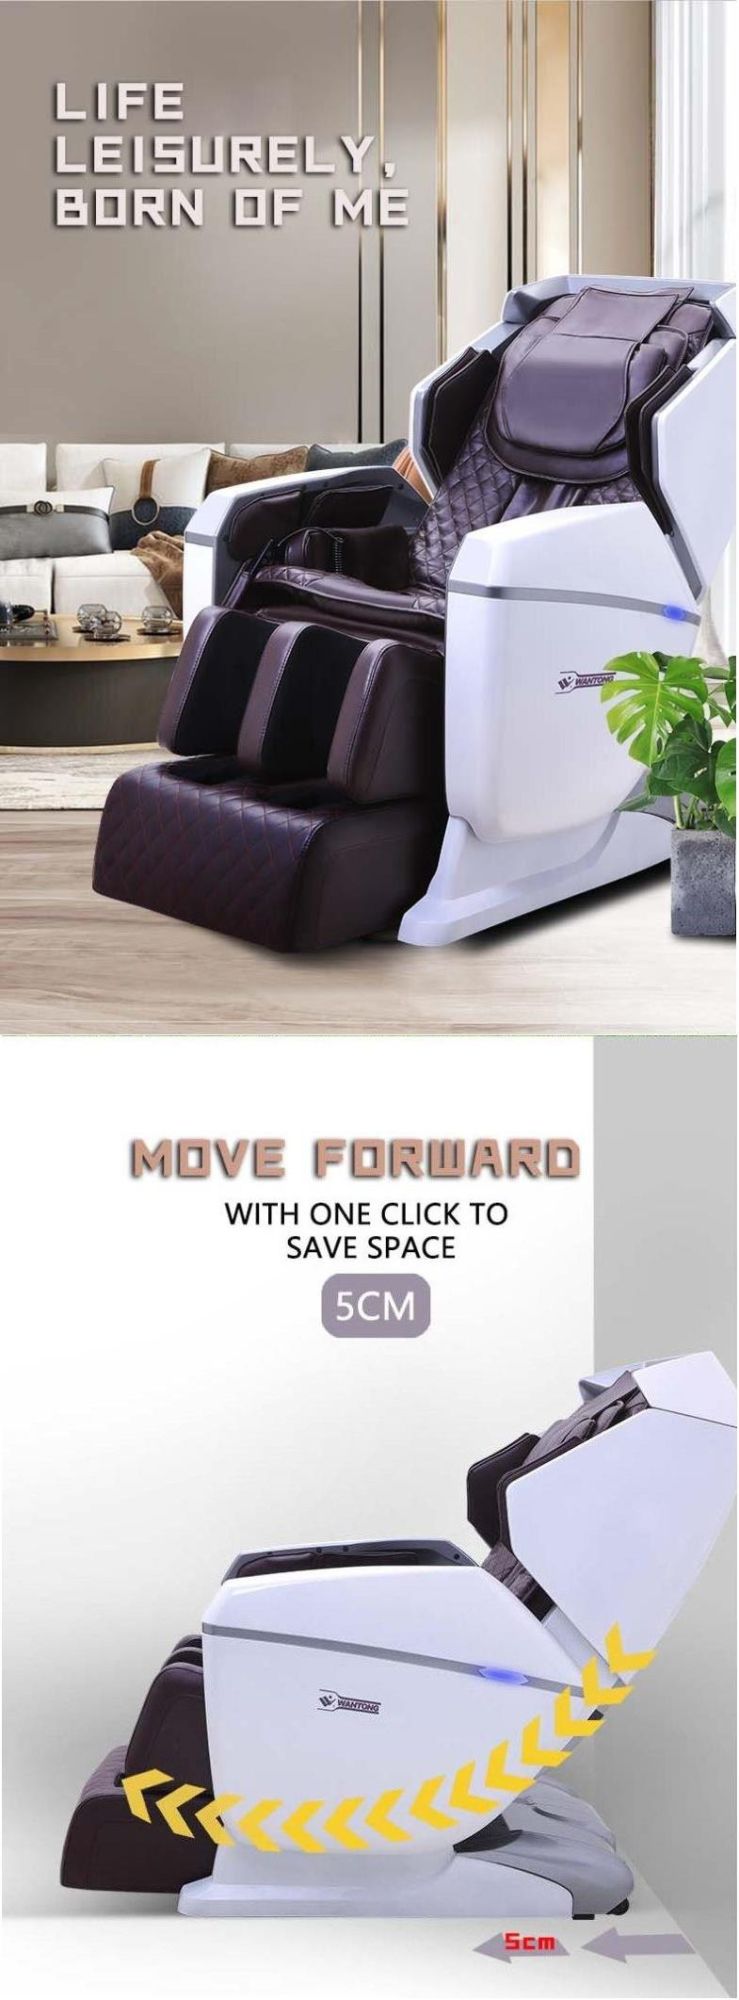 2021 Cheap Price Ergonomic Electric Zero Gravity Shiatsu Kneading Full Body Foot Head Massage Chair